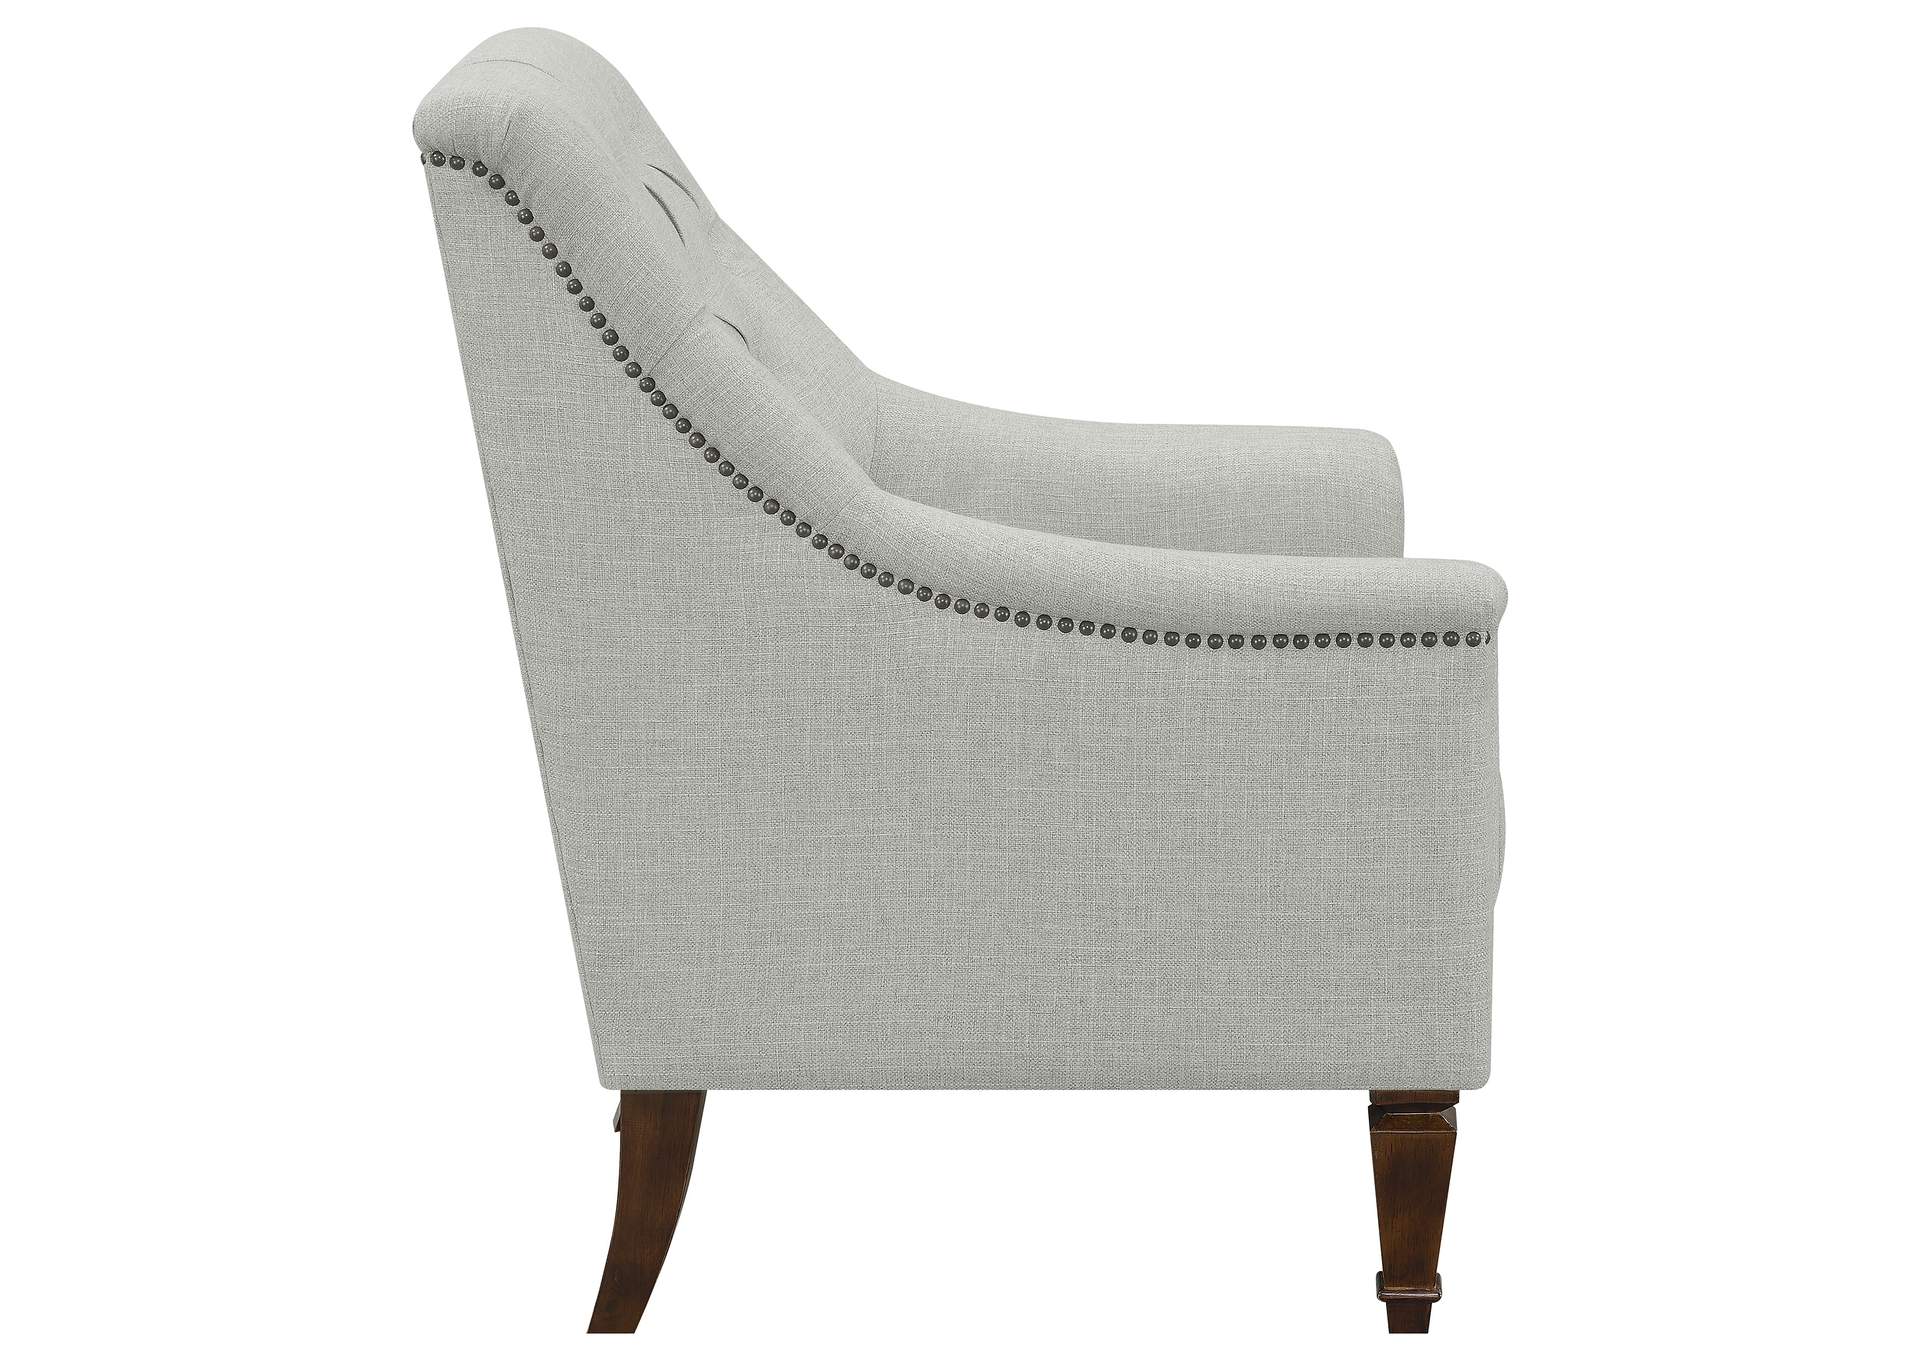 Avonlea Sloped Arm Upholstered Chair Grey,Coaster Furniture